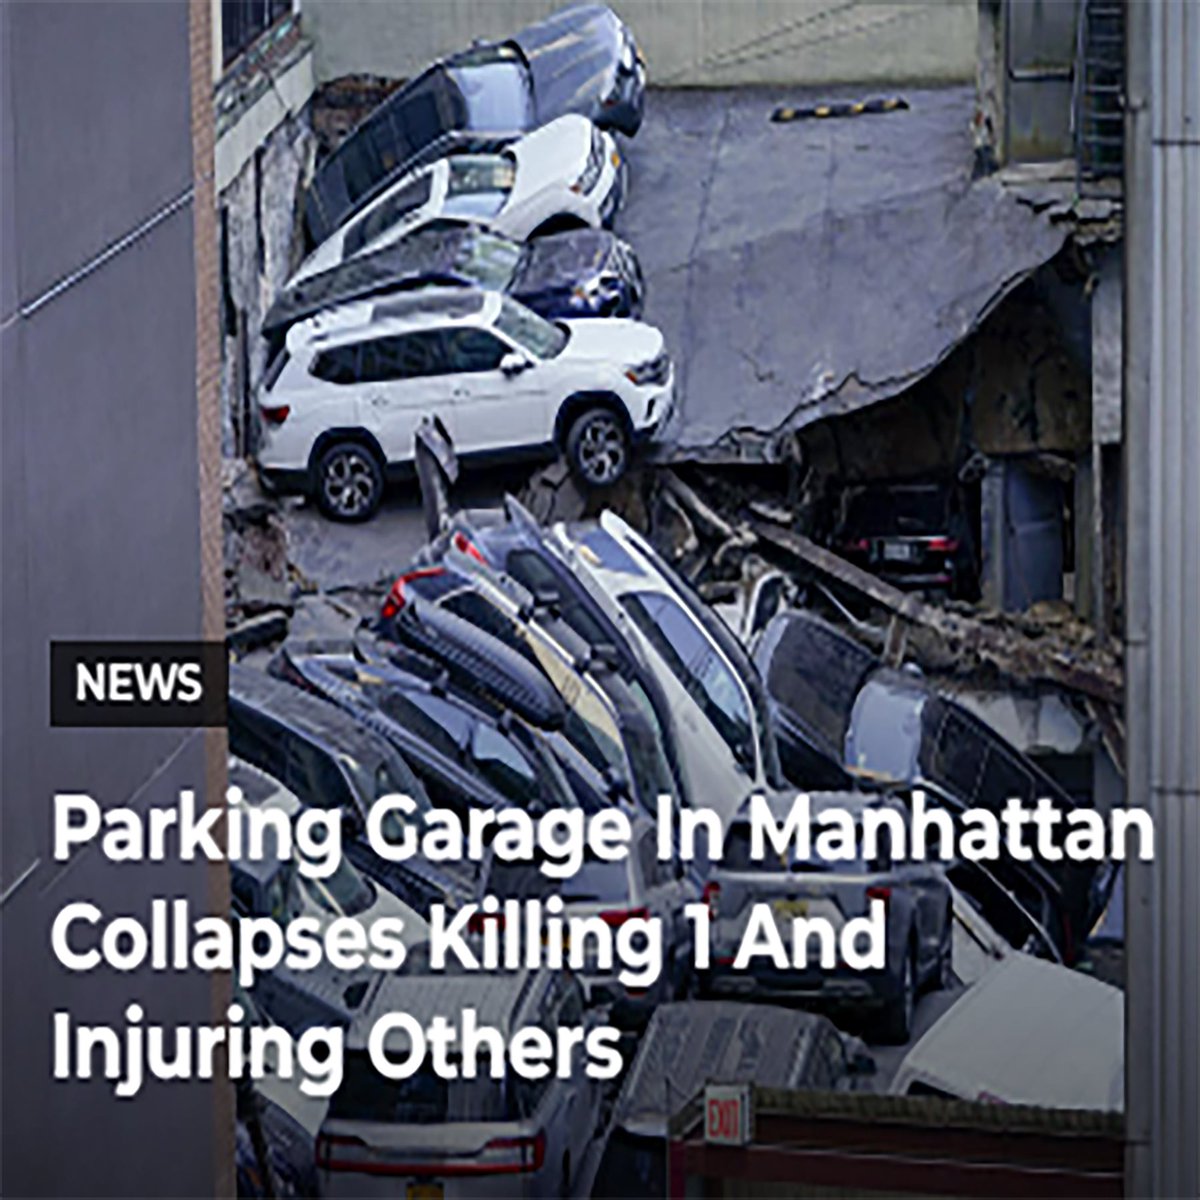 Parking Garage Collapses In Manhattan

To read more visit accessunlocked.com

#manhattan #parking #newyork #AccessUnlocked #news #media #branding #promo 

accessunlocked.com/parking-garage…